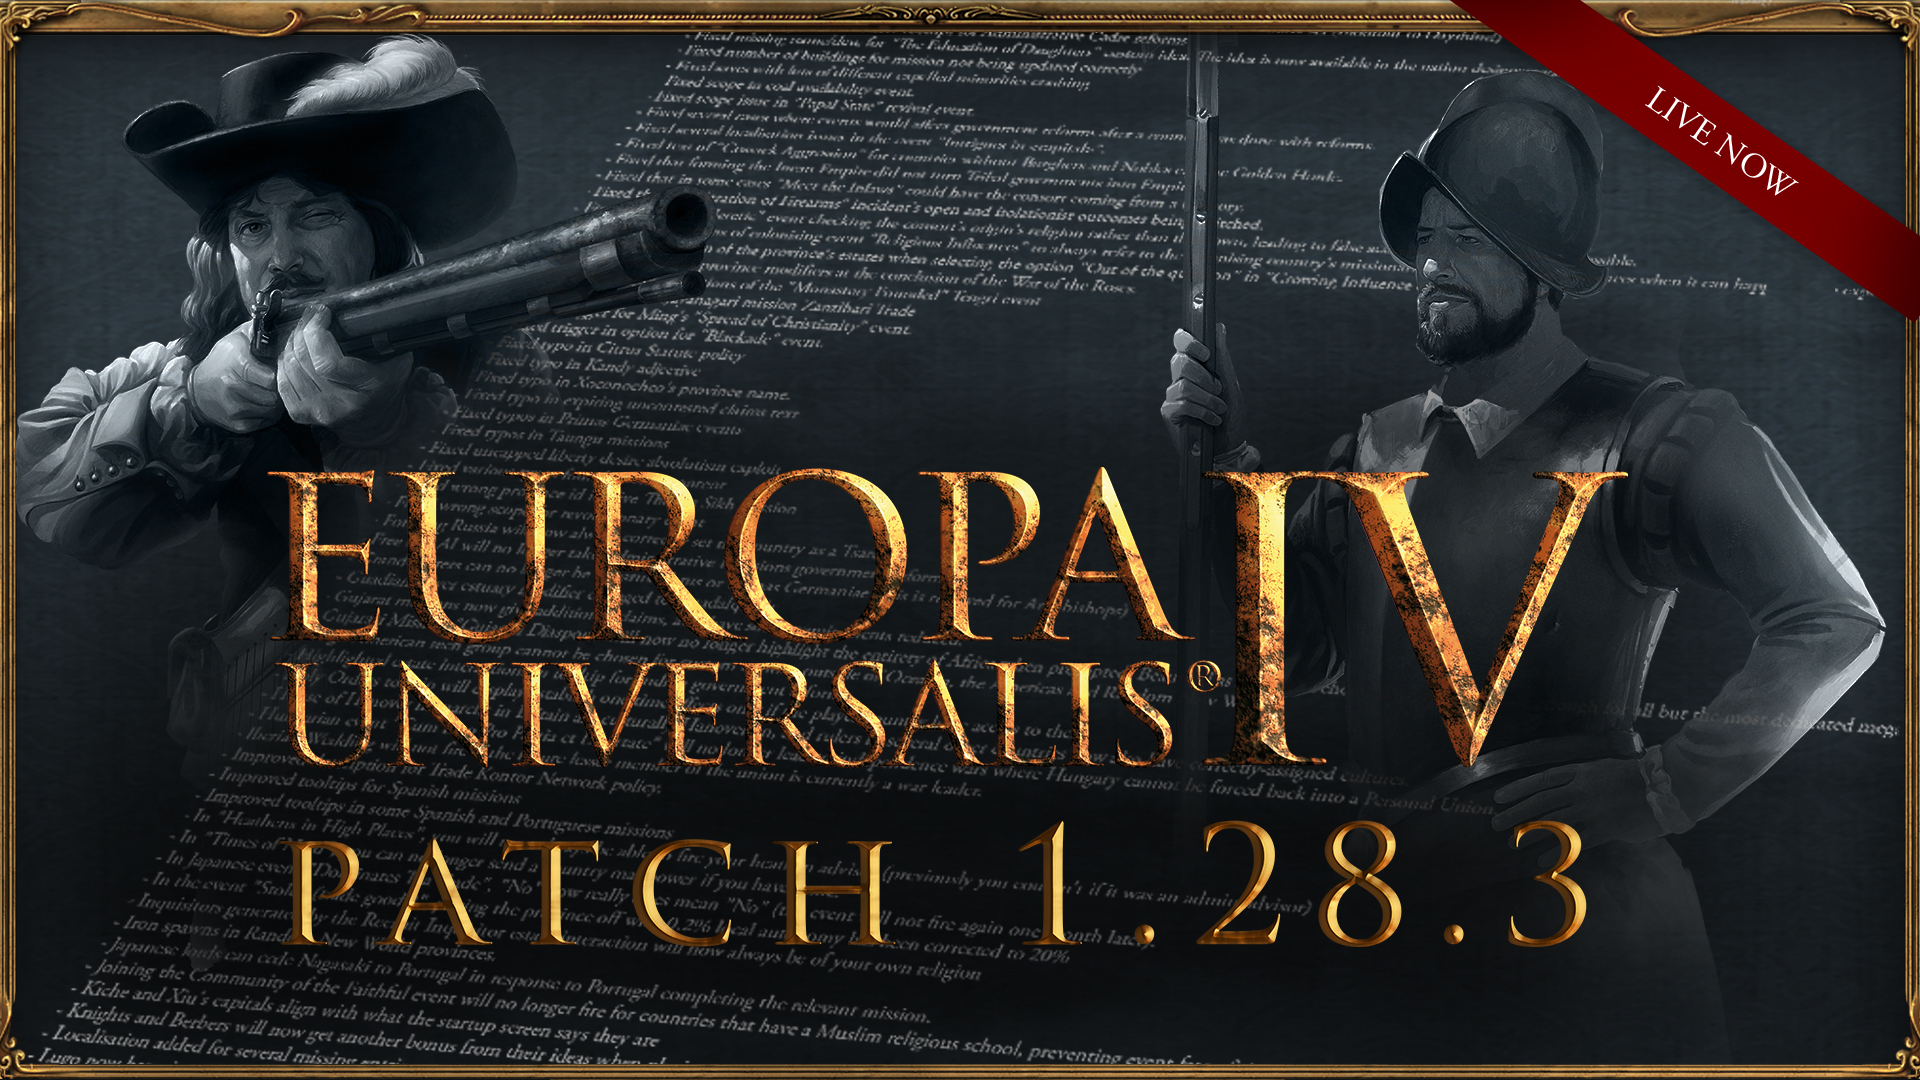 europa universalis 4 steam coupon